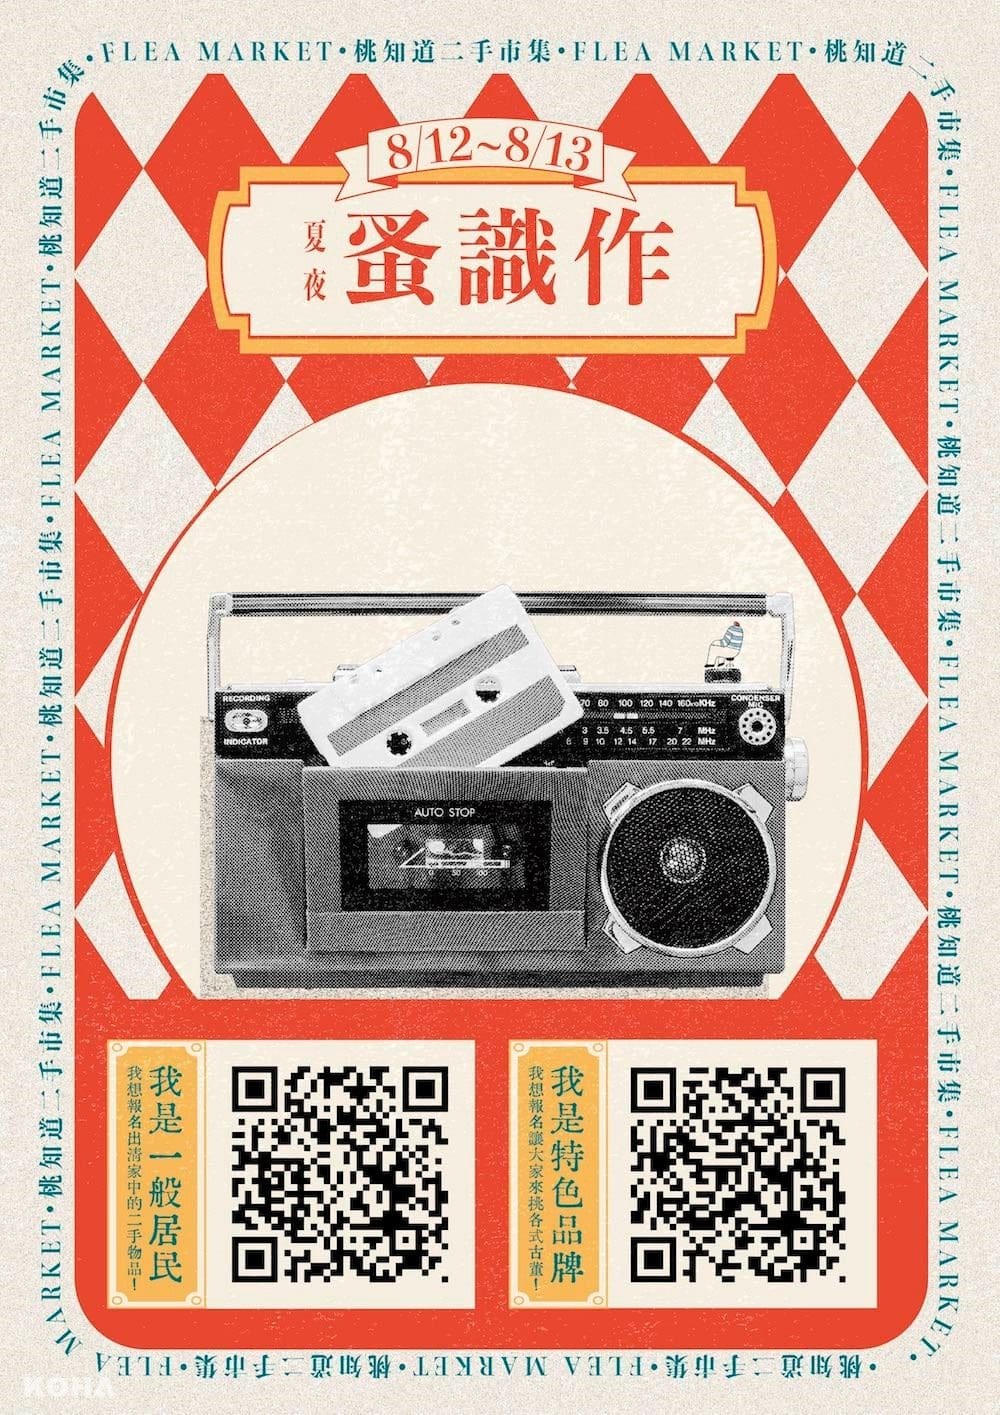 august2023w2 culturalandcreativemarket Taoyuan information